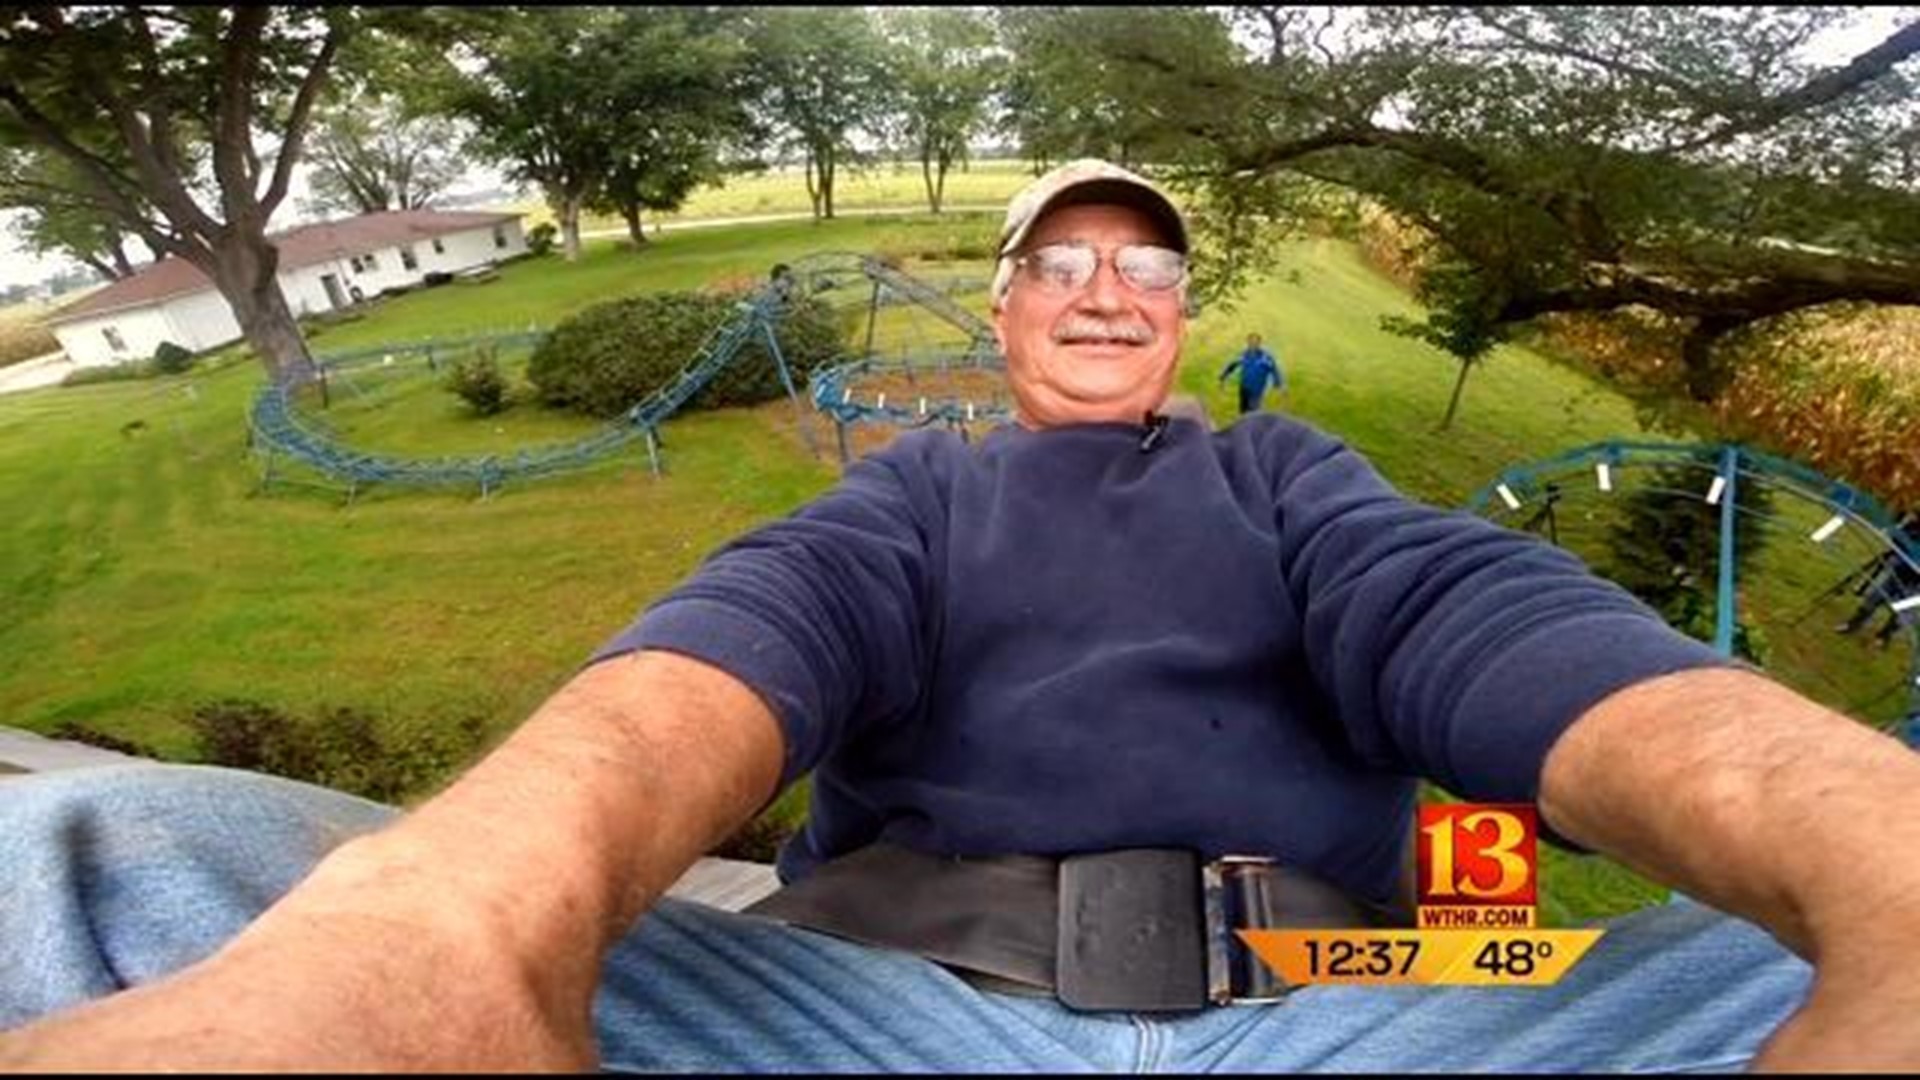 Knox County Man Builds Backyard Roller Coaster Again Wthr Com